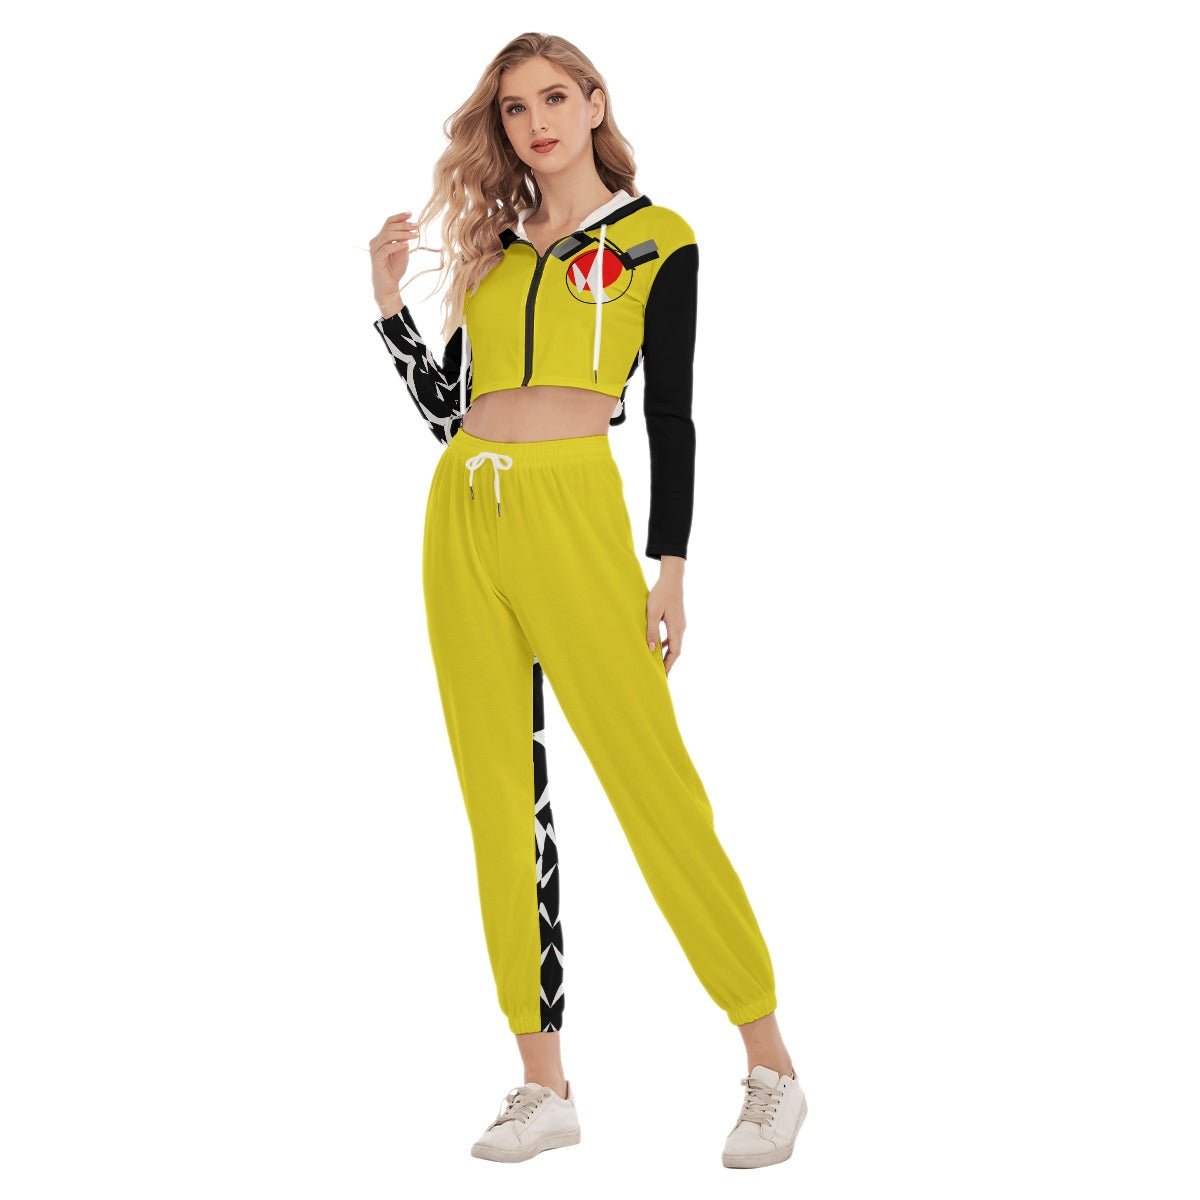 Origen Destination Symbol-inspired Women's Yellow Crop Hoodie Sports Jumpsuit